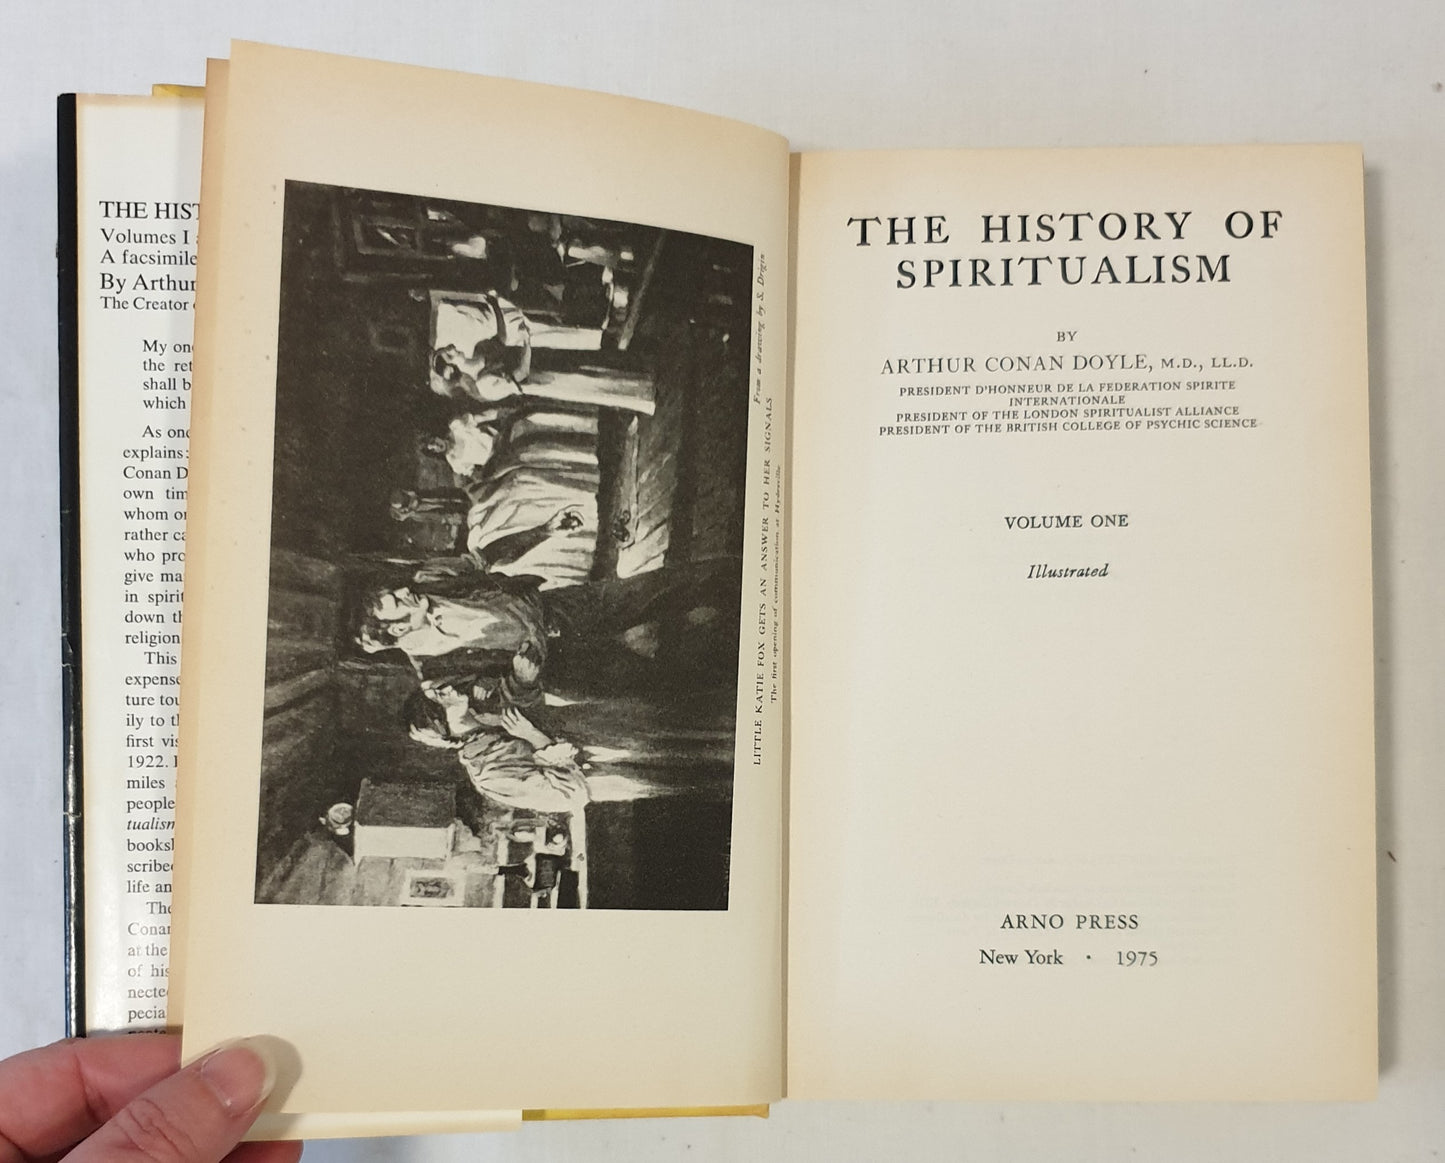 The History of Spiritualism  Volume One  by Arthur Conan Doyle